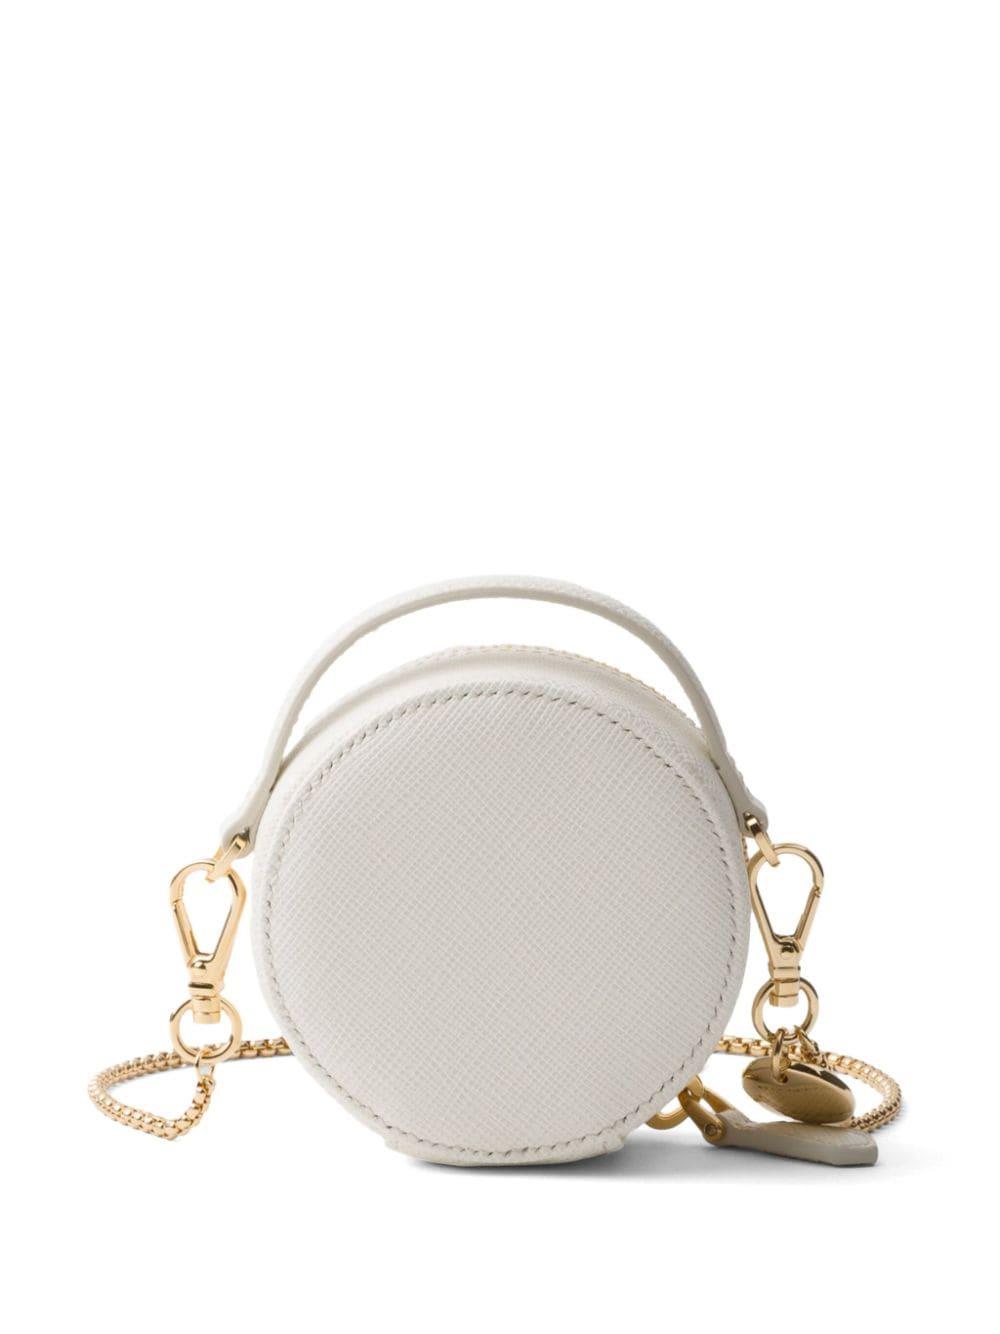 Prada Saffiano leather mini bag - White